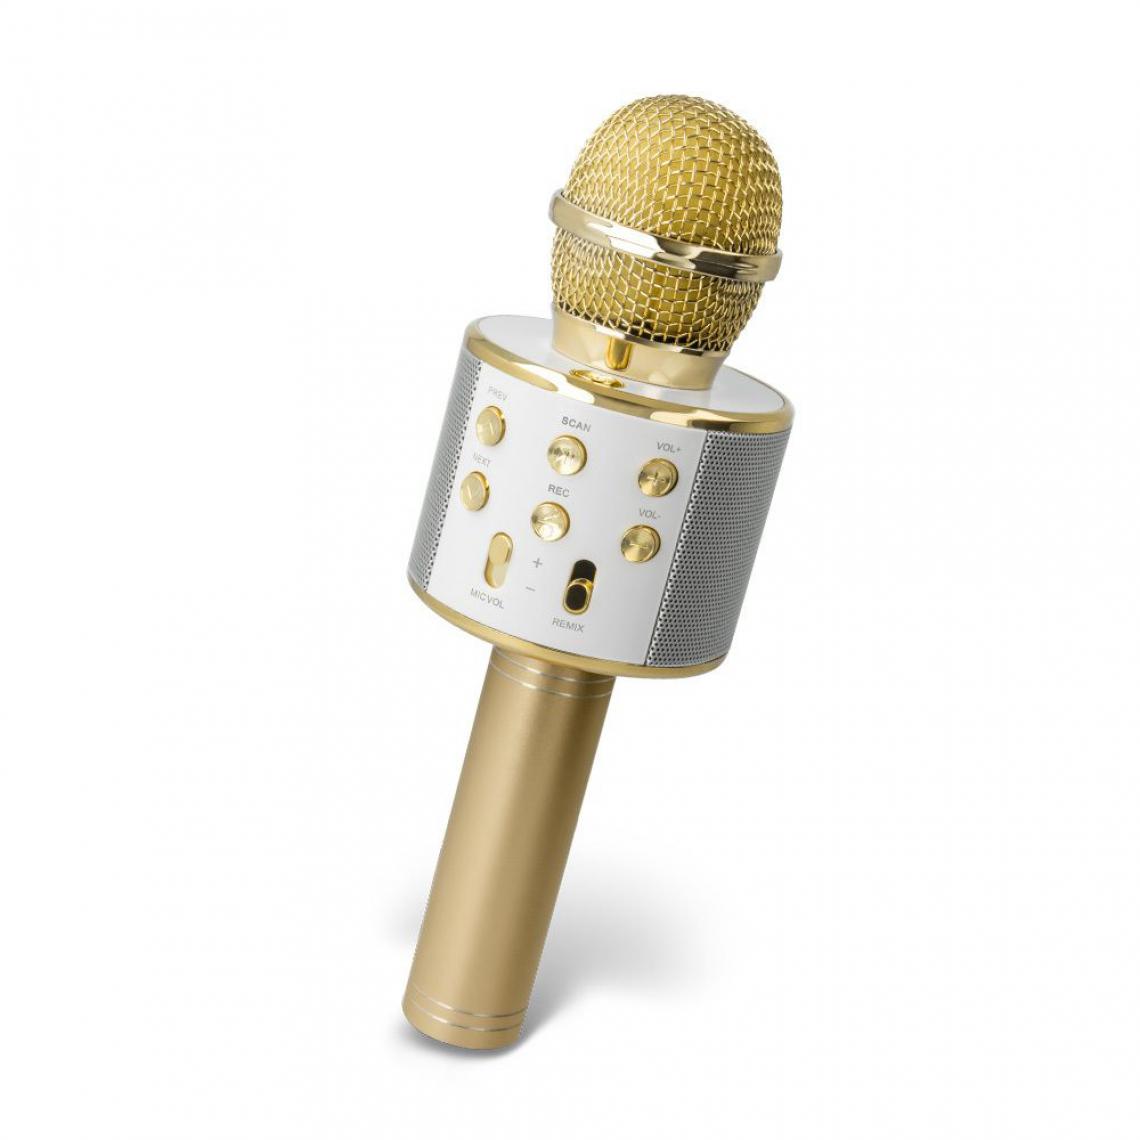 Ozzzo - Microphone Karaoke bluetooth haut parleur ozzzo Gold Or pour HomTom HT80 - Autres accessoires smartphone